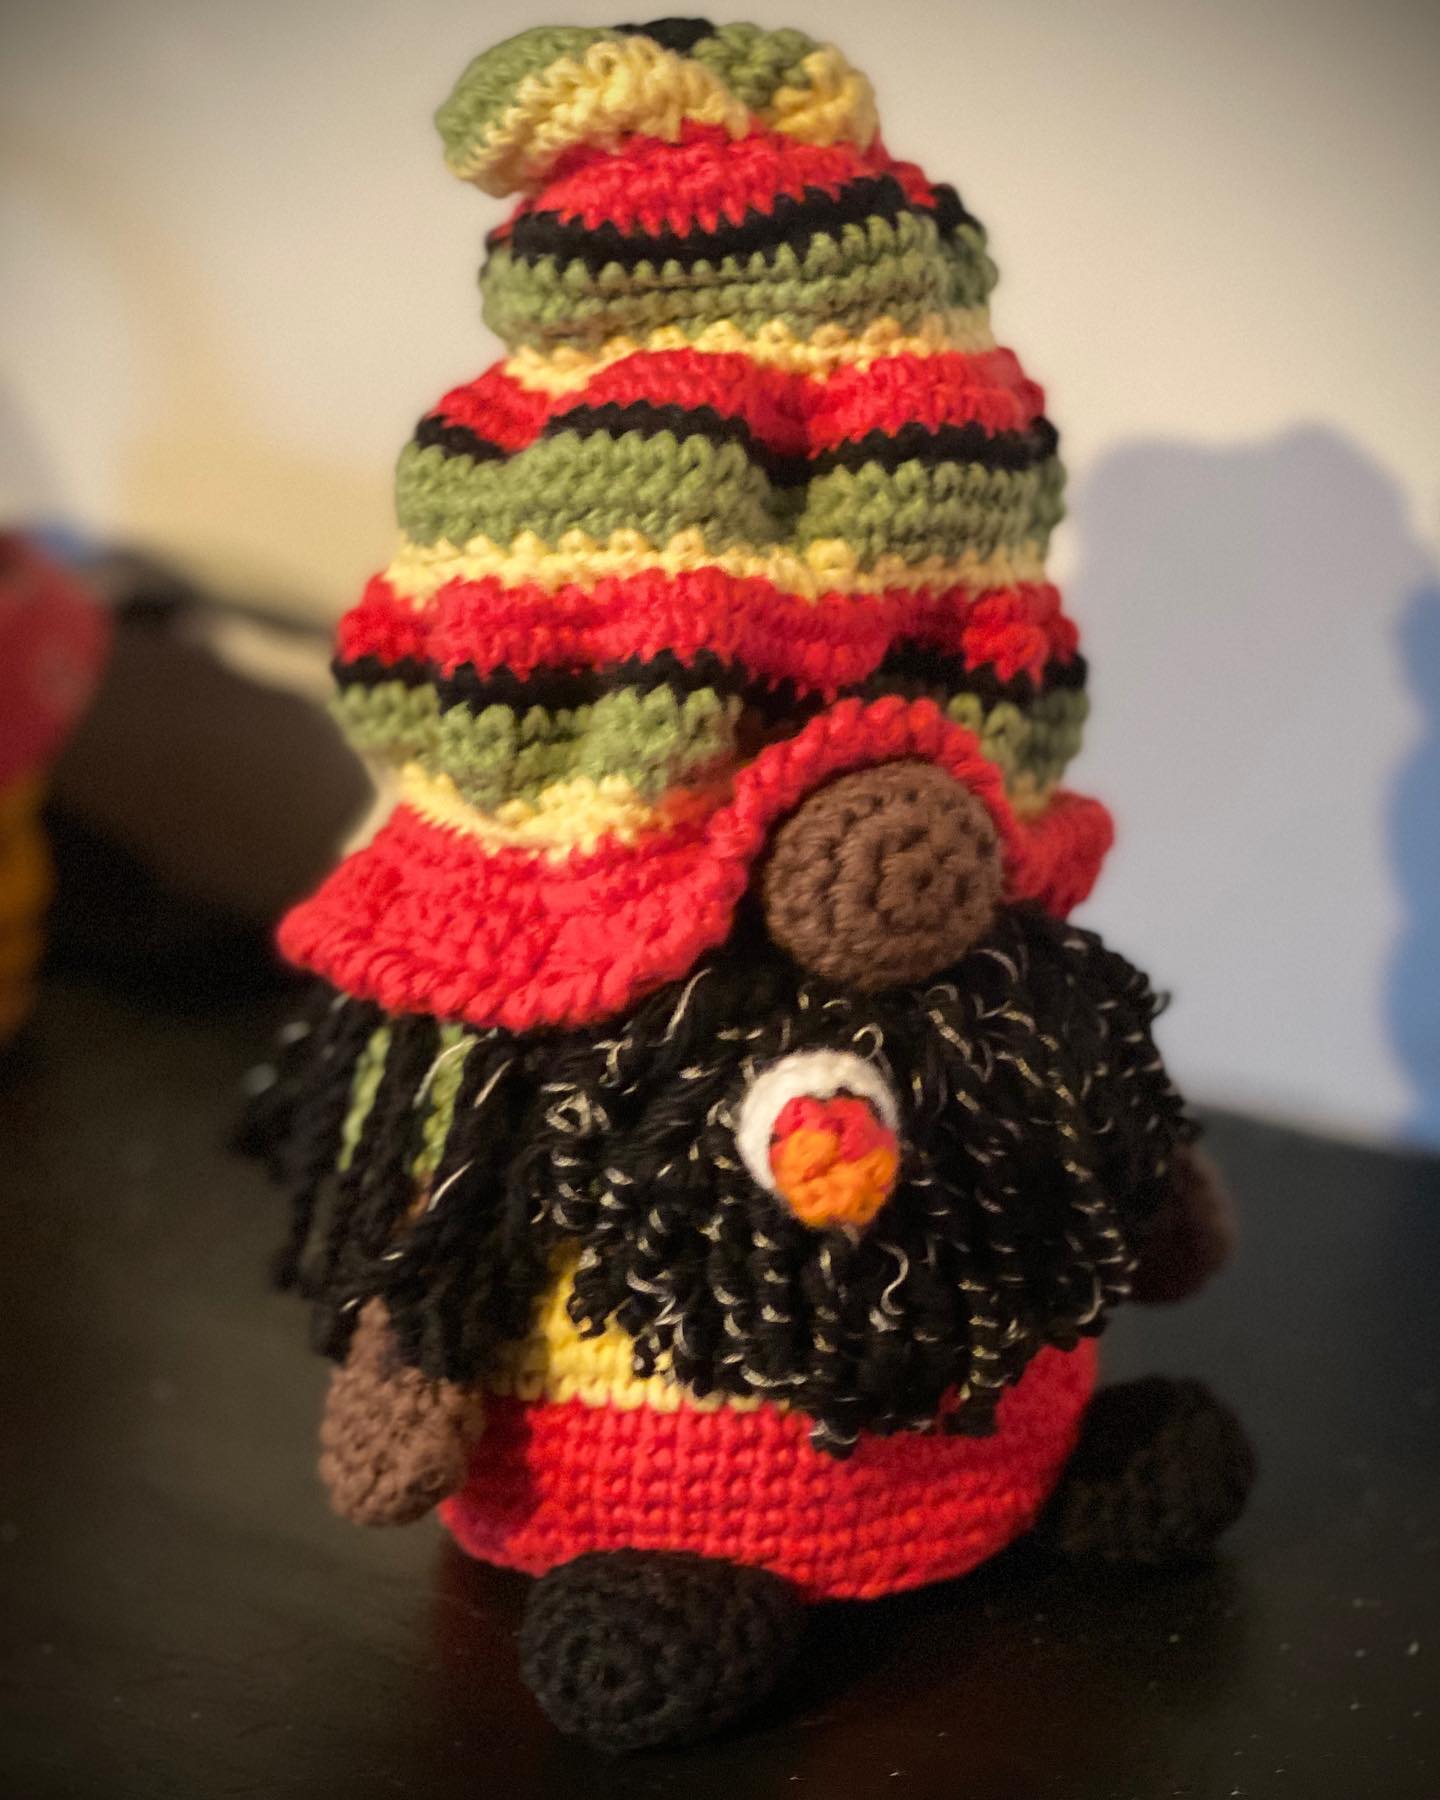 My #bobmarley #gnome #homemade #crochet